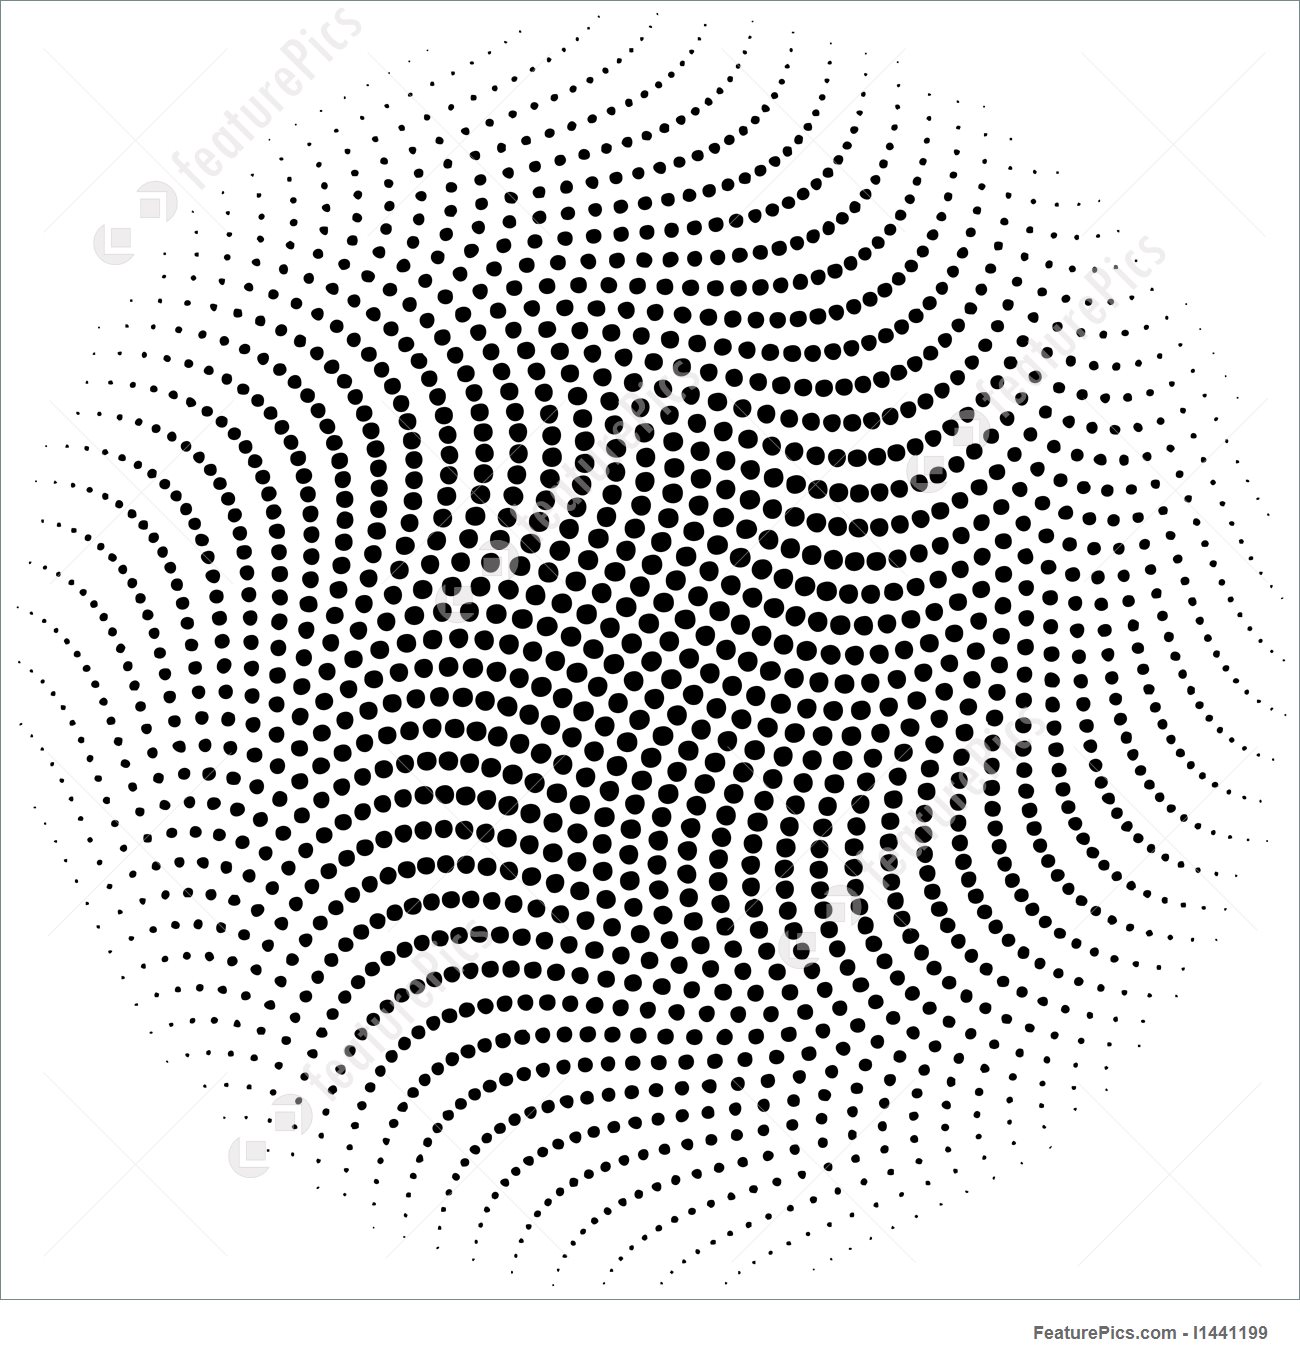 illustrator dot patterns download